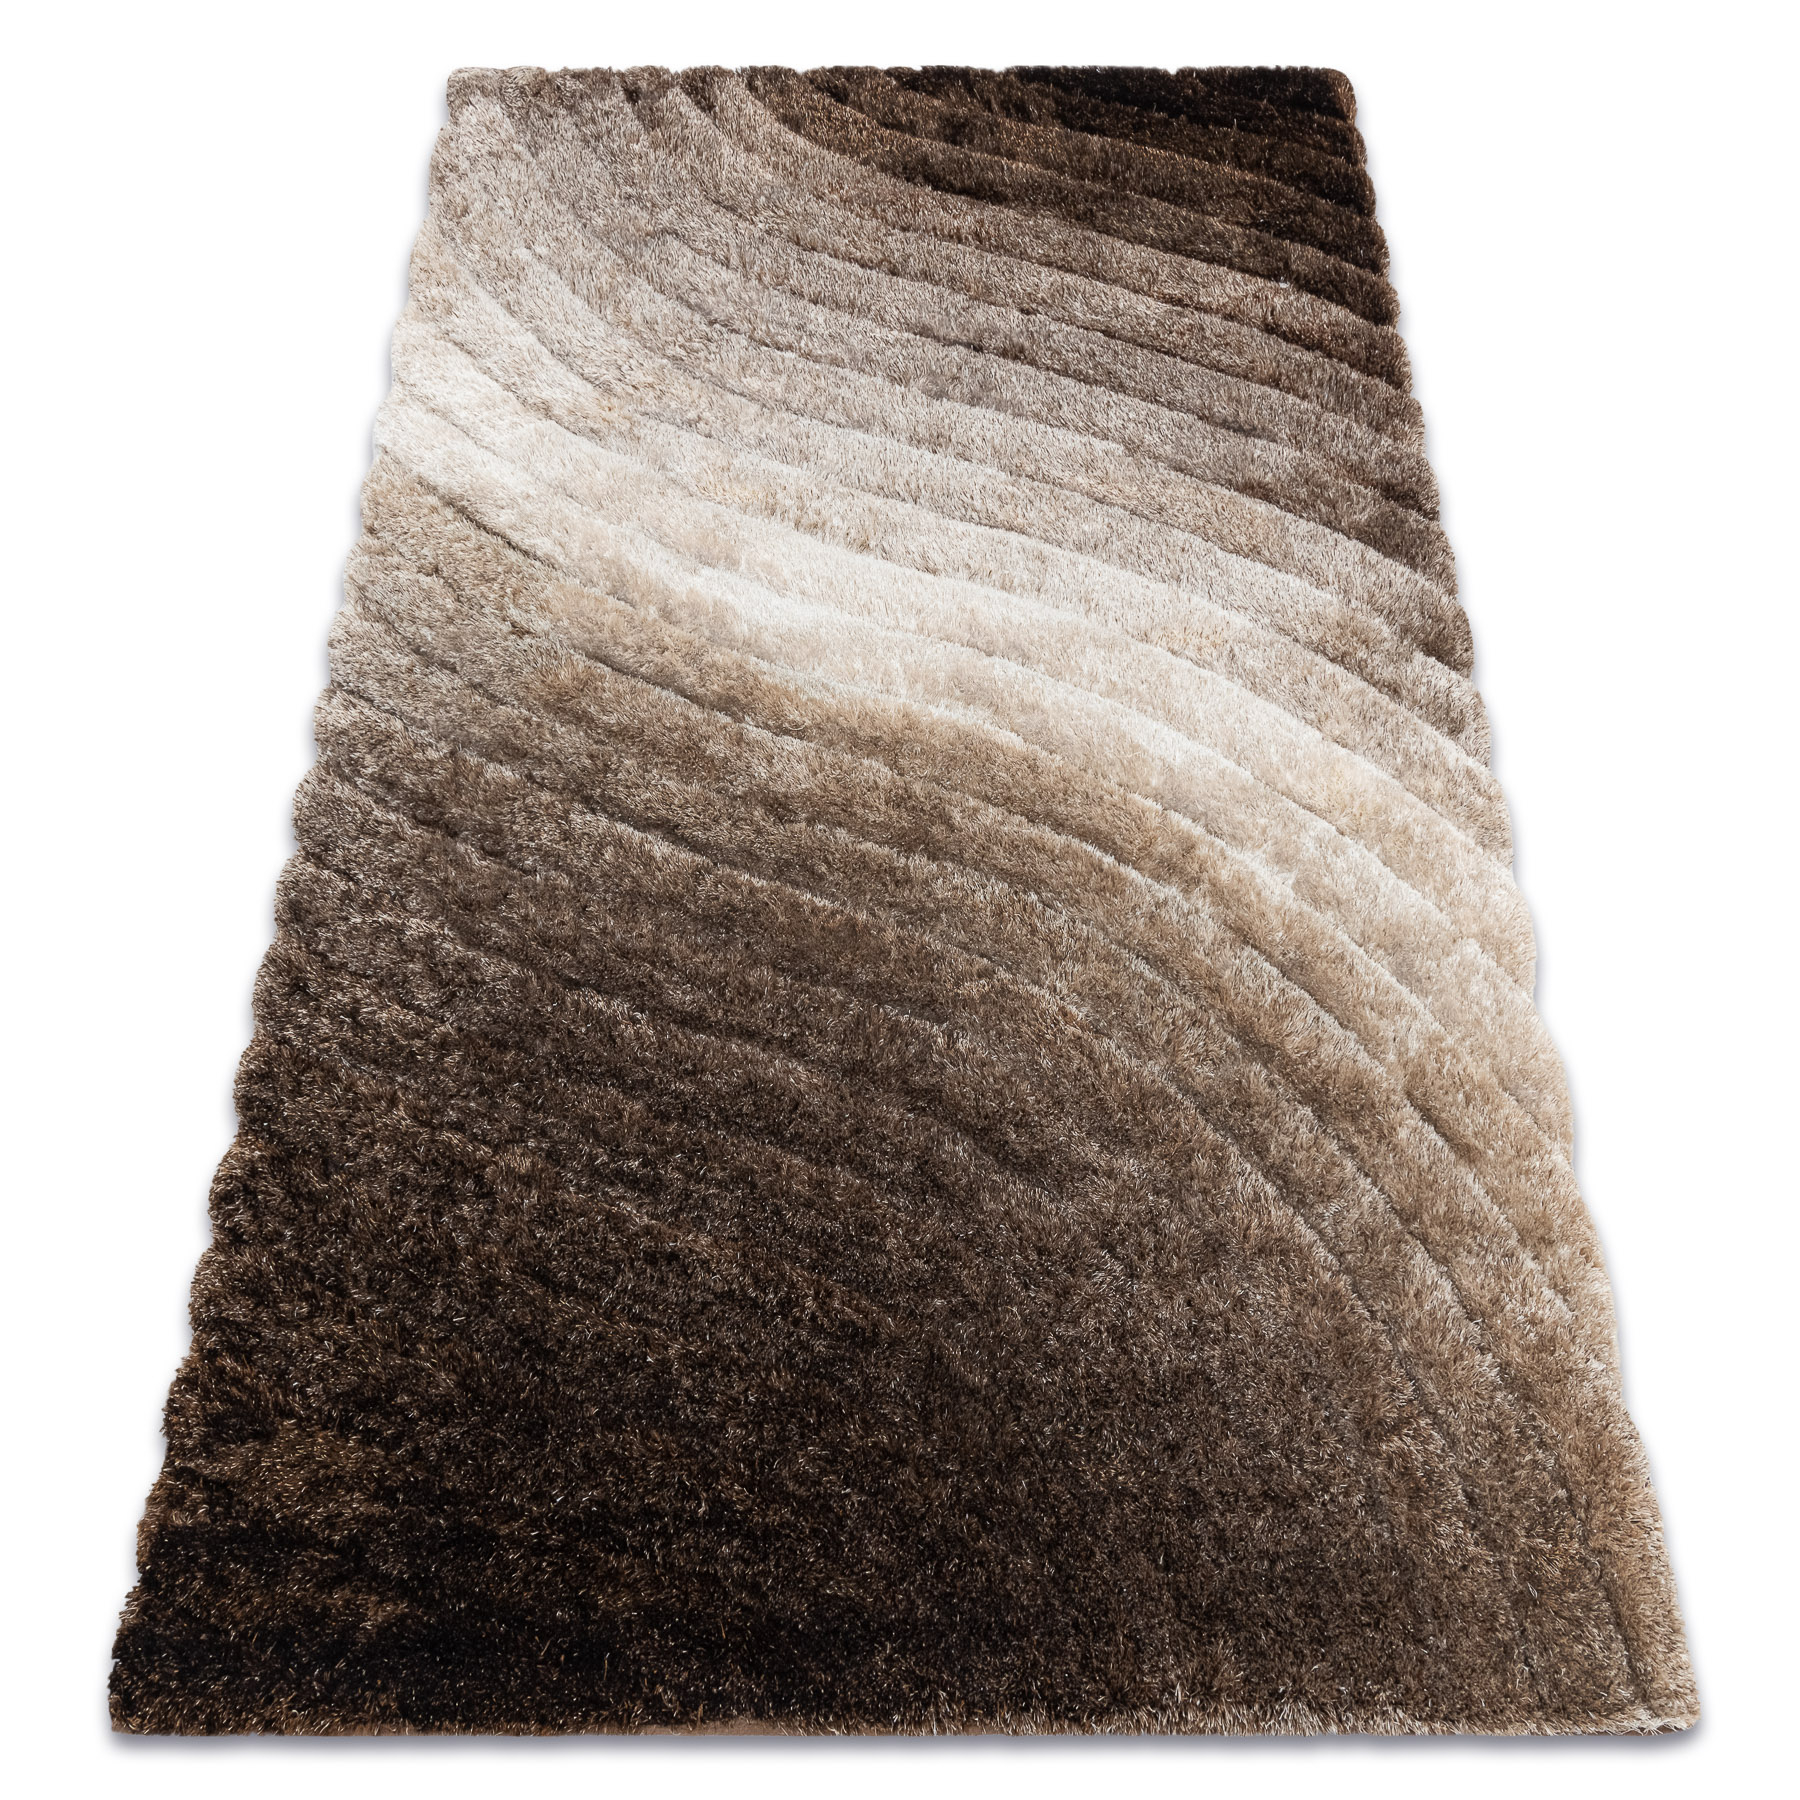 DJHWWD pulisci tappeto Tappeti Per Casa tappeto moderno geometrico